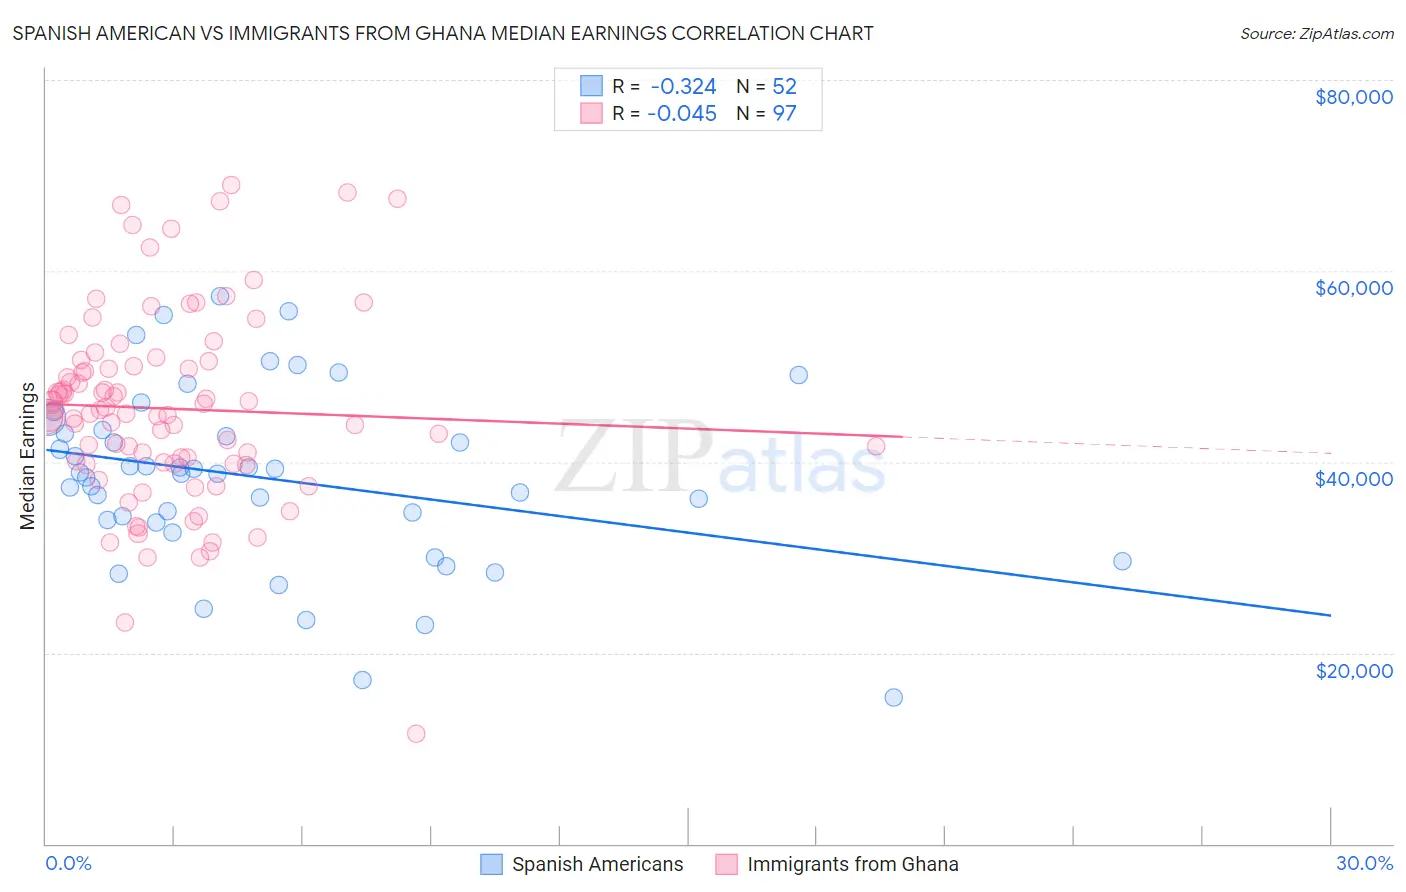 Spanish American vs Immigrants from Ghana Median Earnings